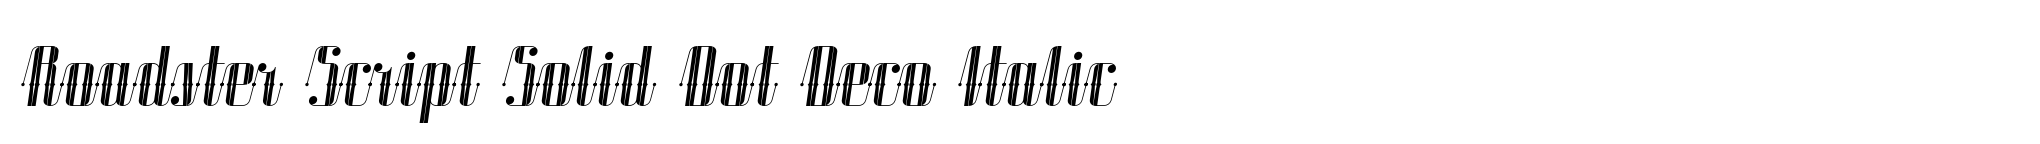 Roadster Script Solid Dot Deco Italic image